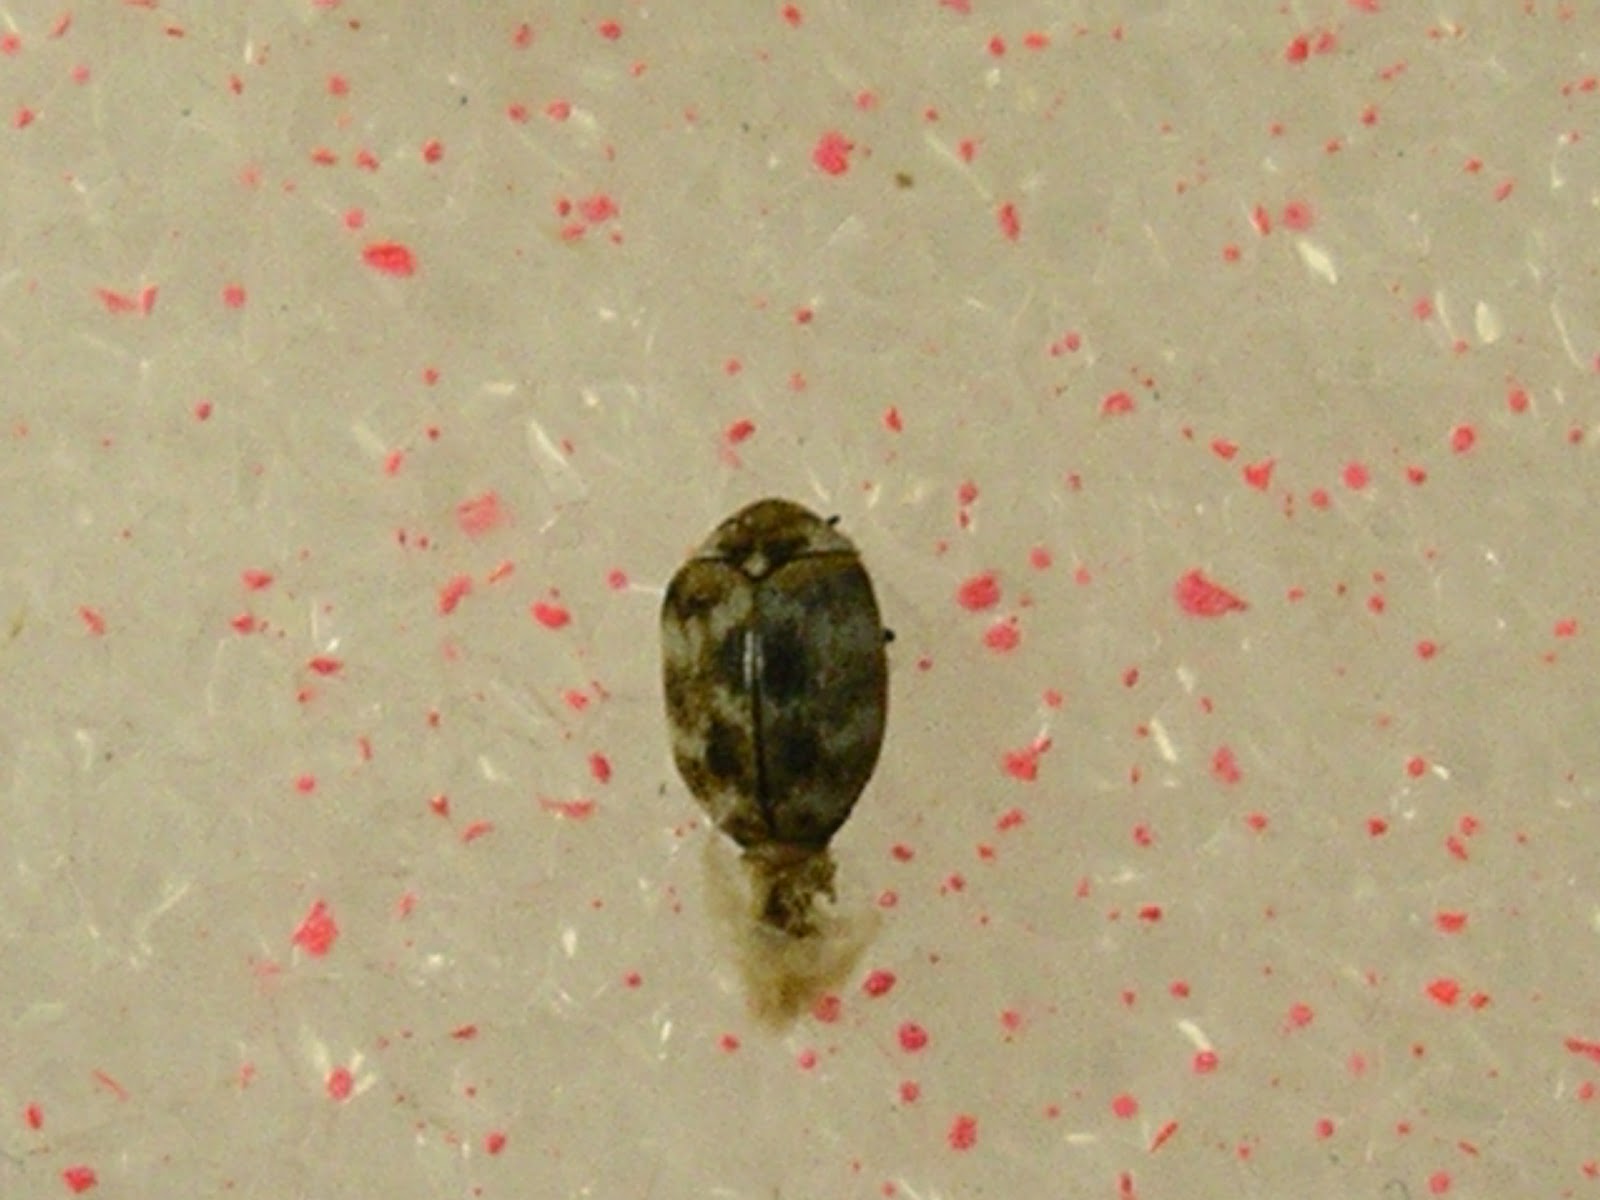 carpet beetle adult carpet beetles can be solid black or